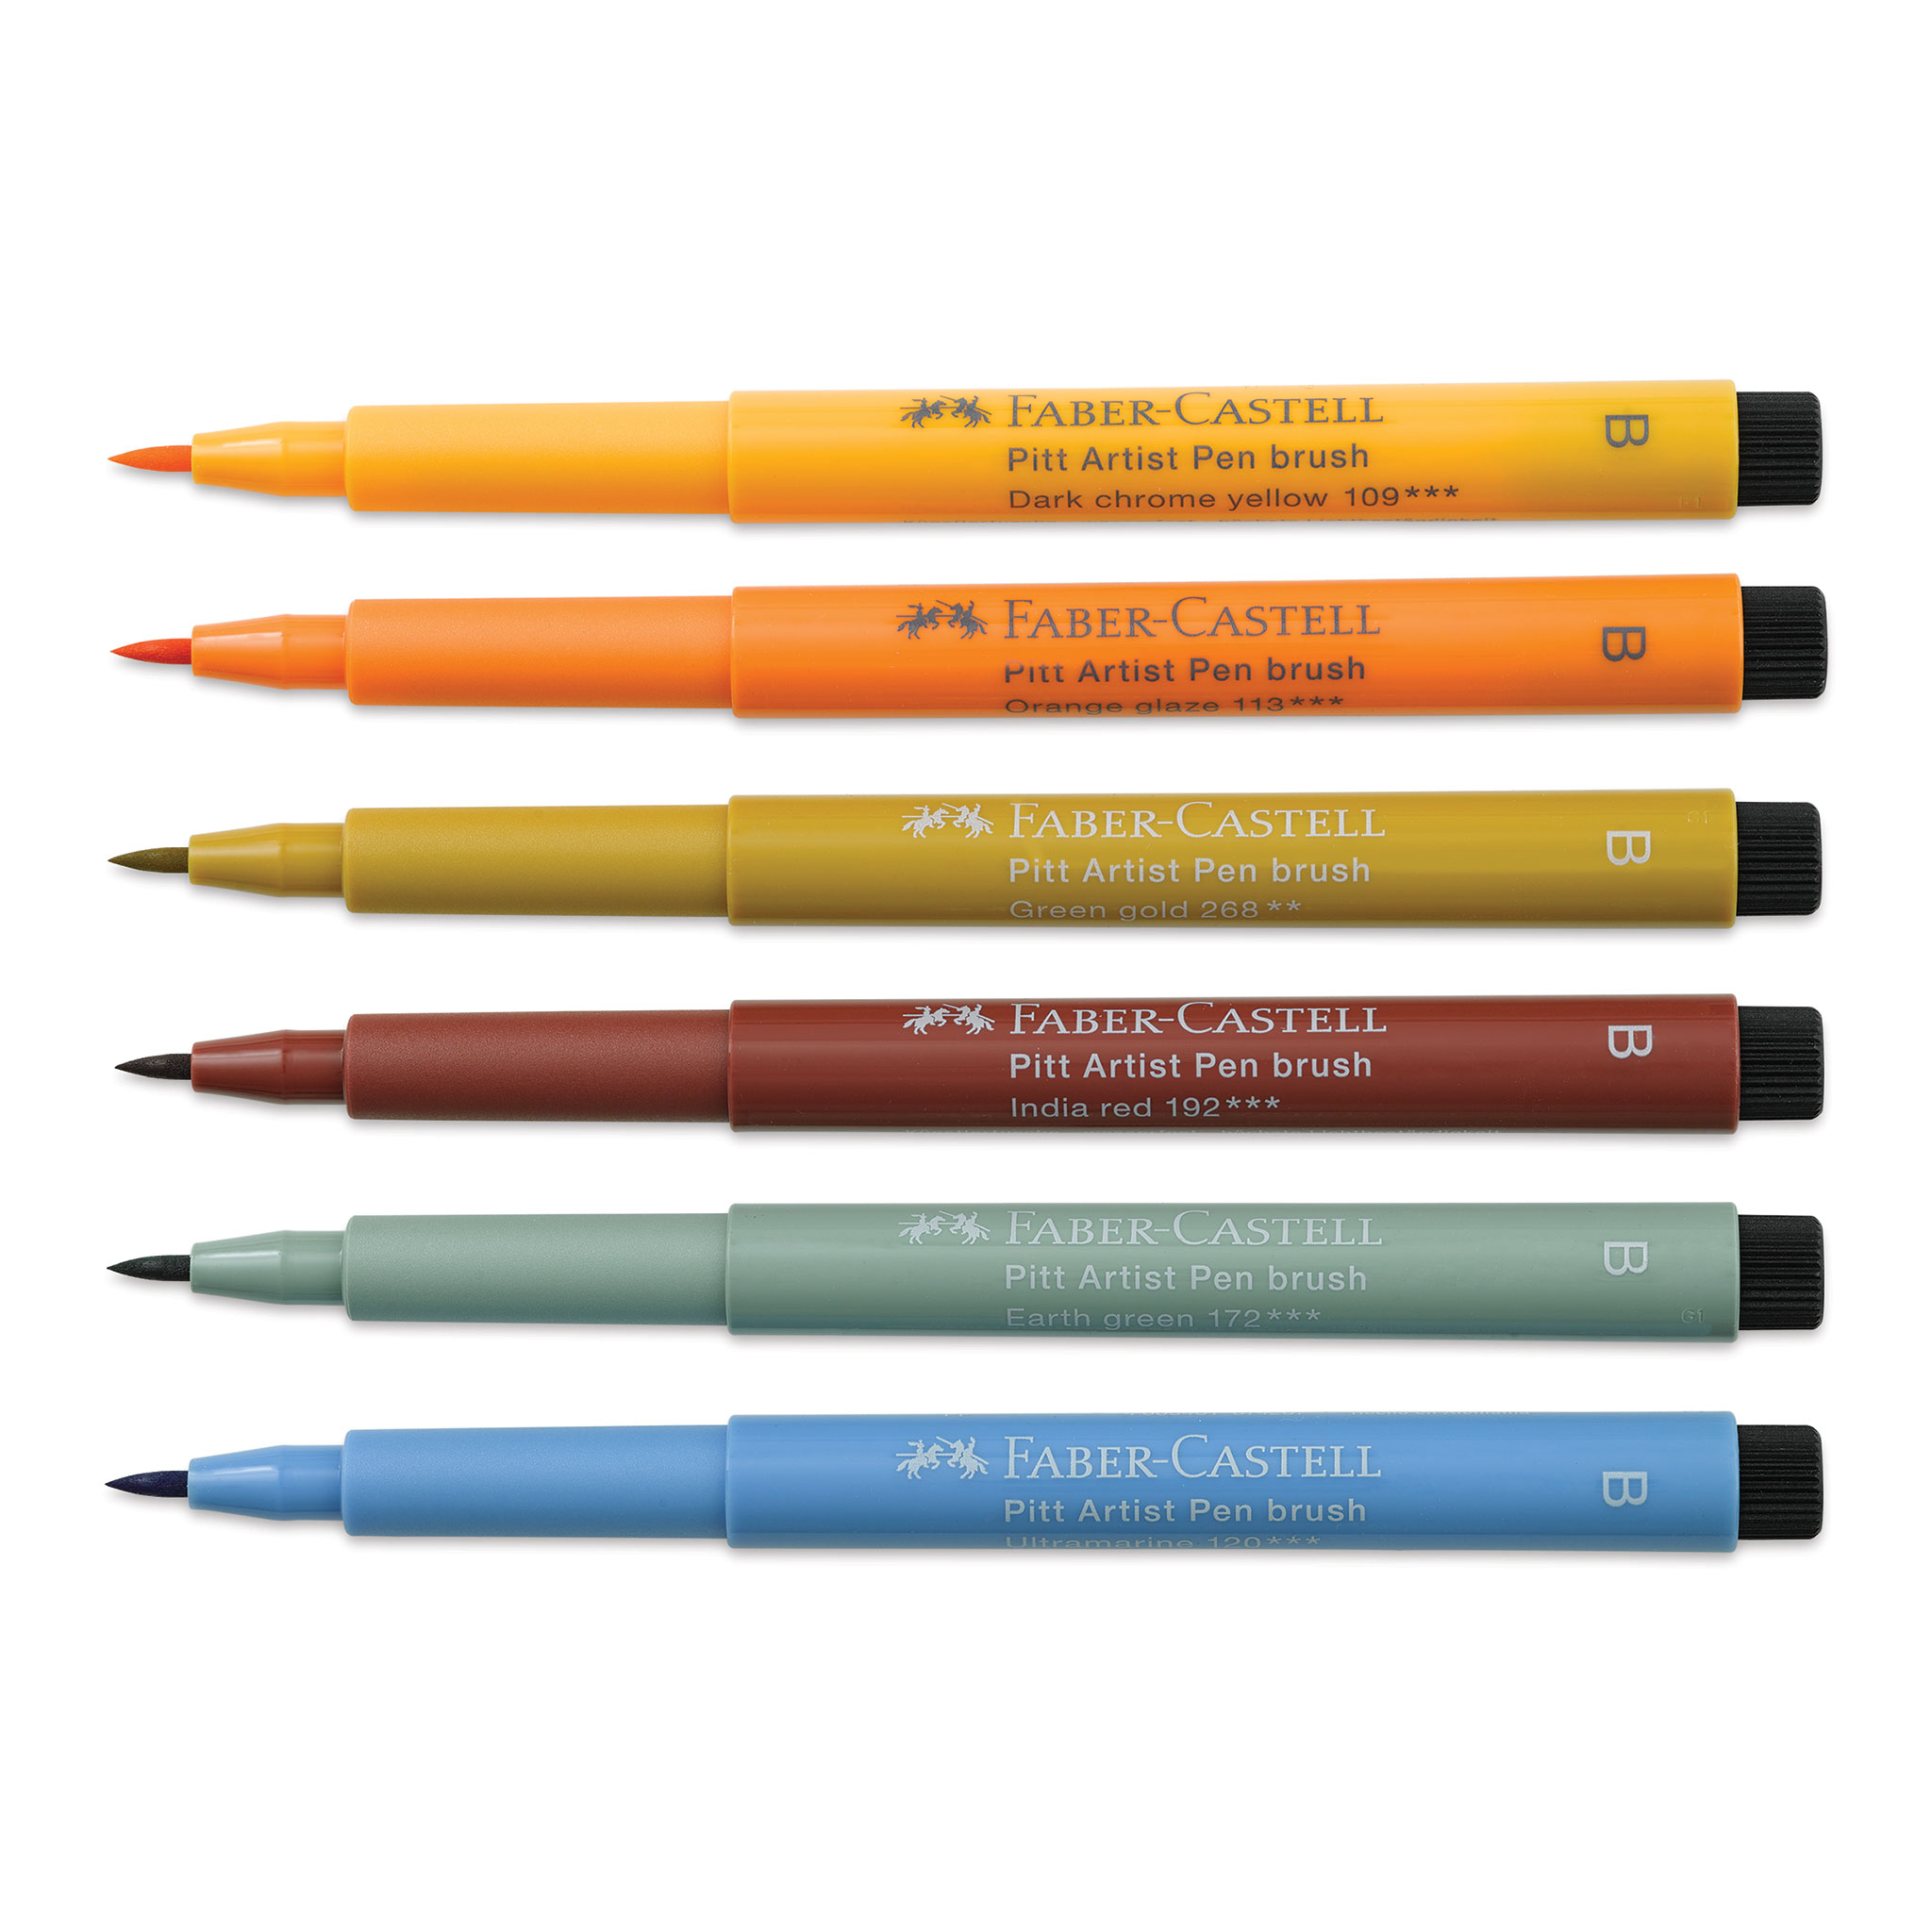 Faber-Castell Pitt Brush Wallet Pens Pastel Colors (Set of 6)